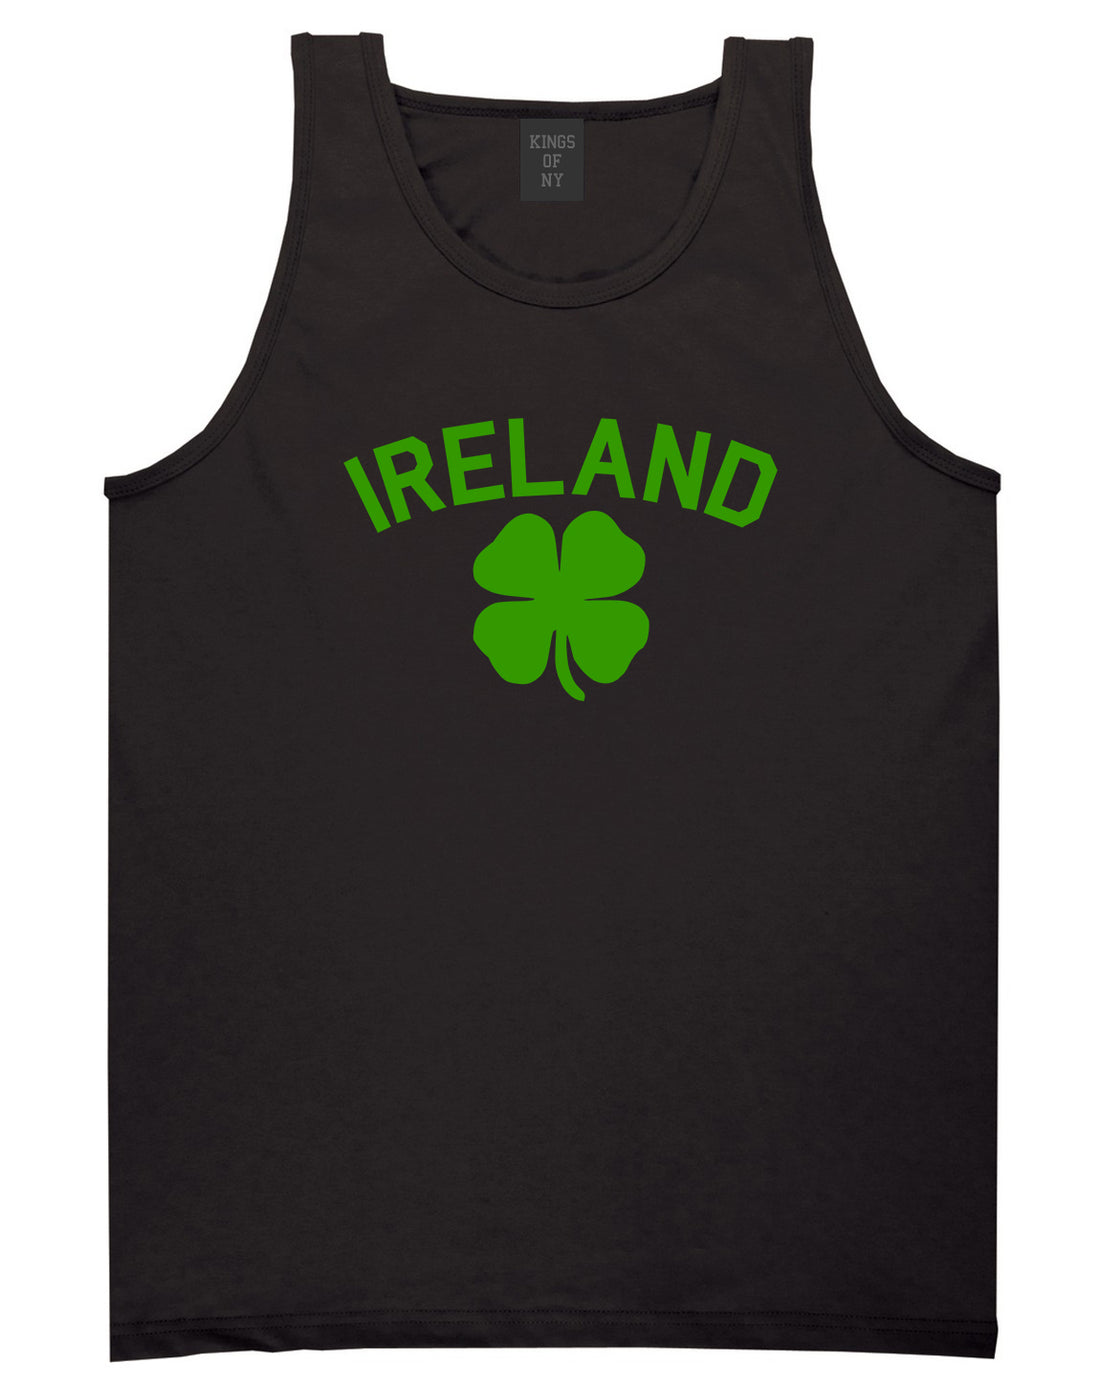 Ireland Shamrock St Paddys Day Mens Tank Top Shirt Black